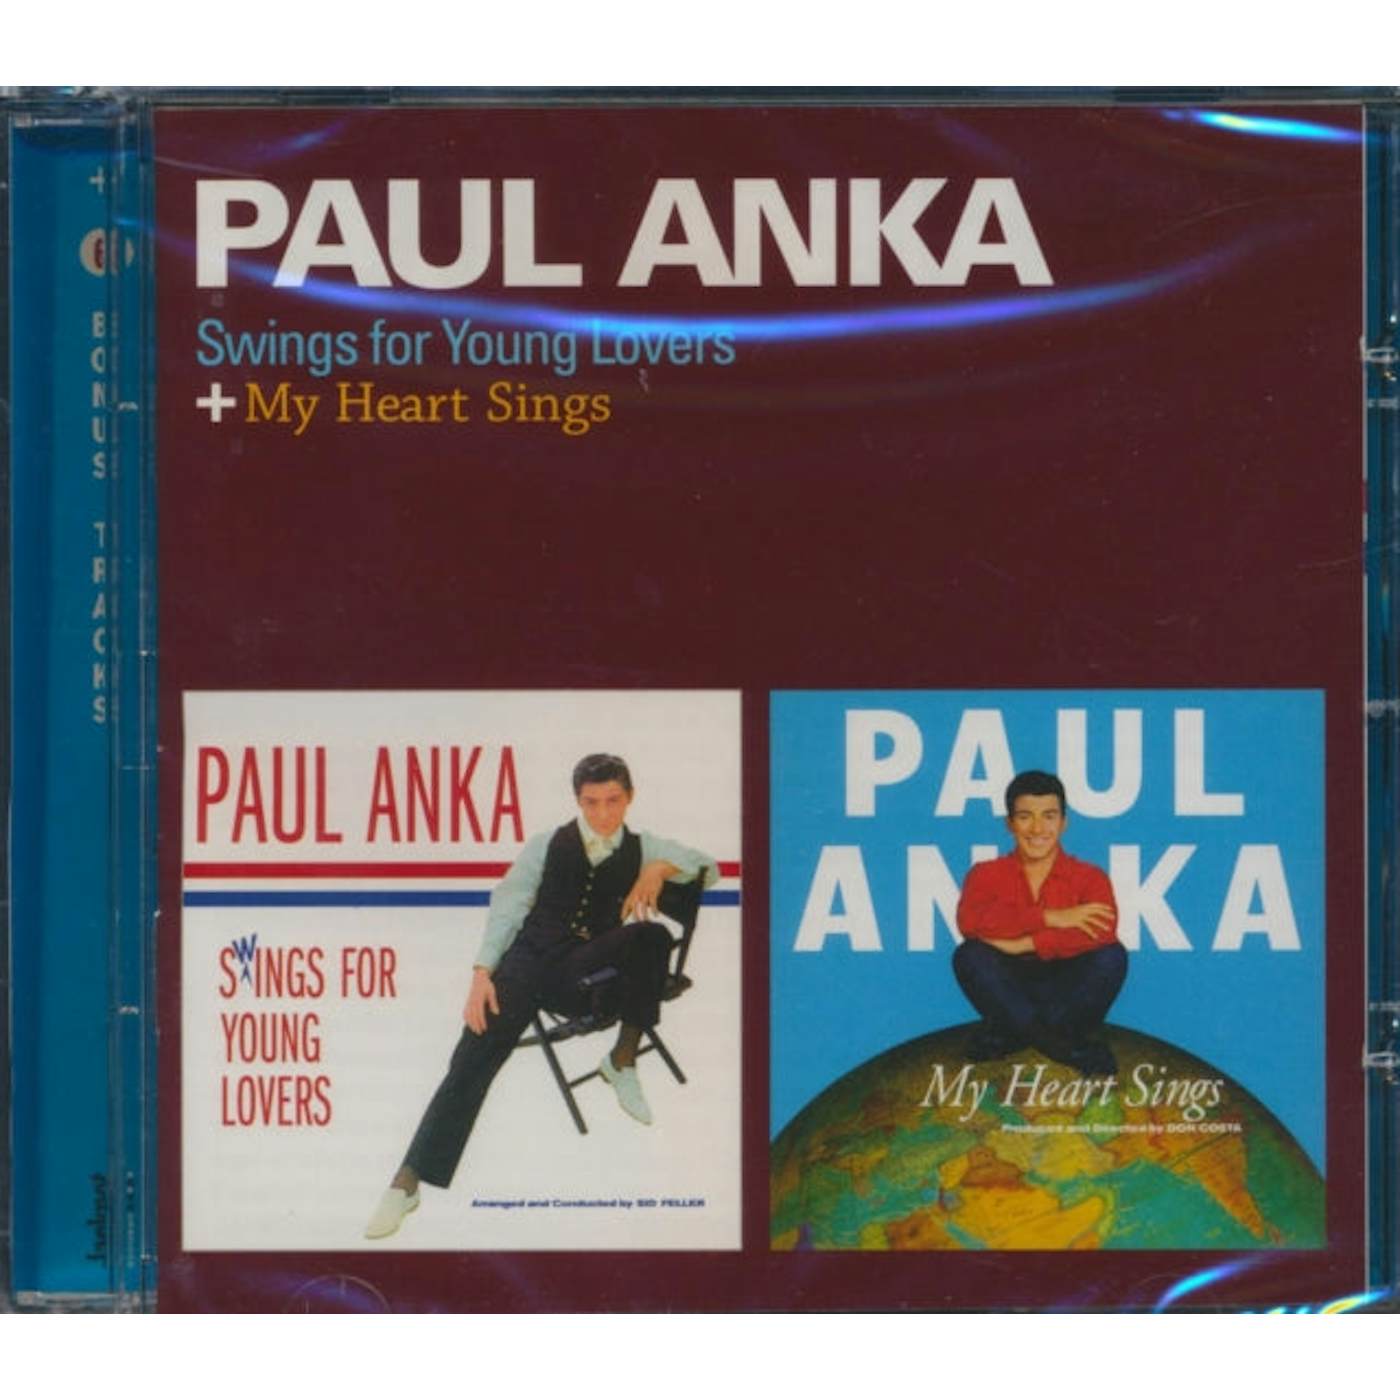 Paul Anka CD - Swings For Young Lovers / My Heart Sings